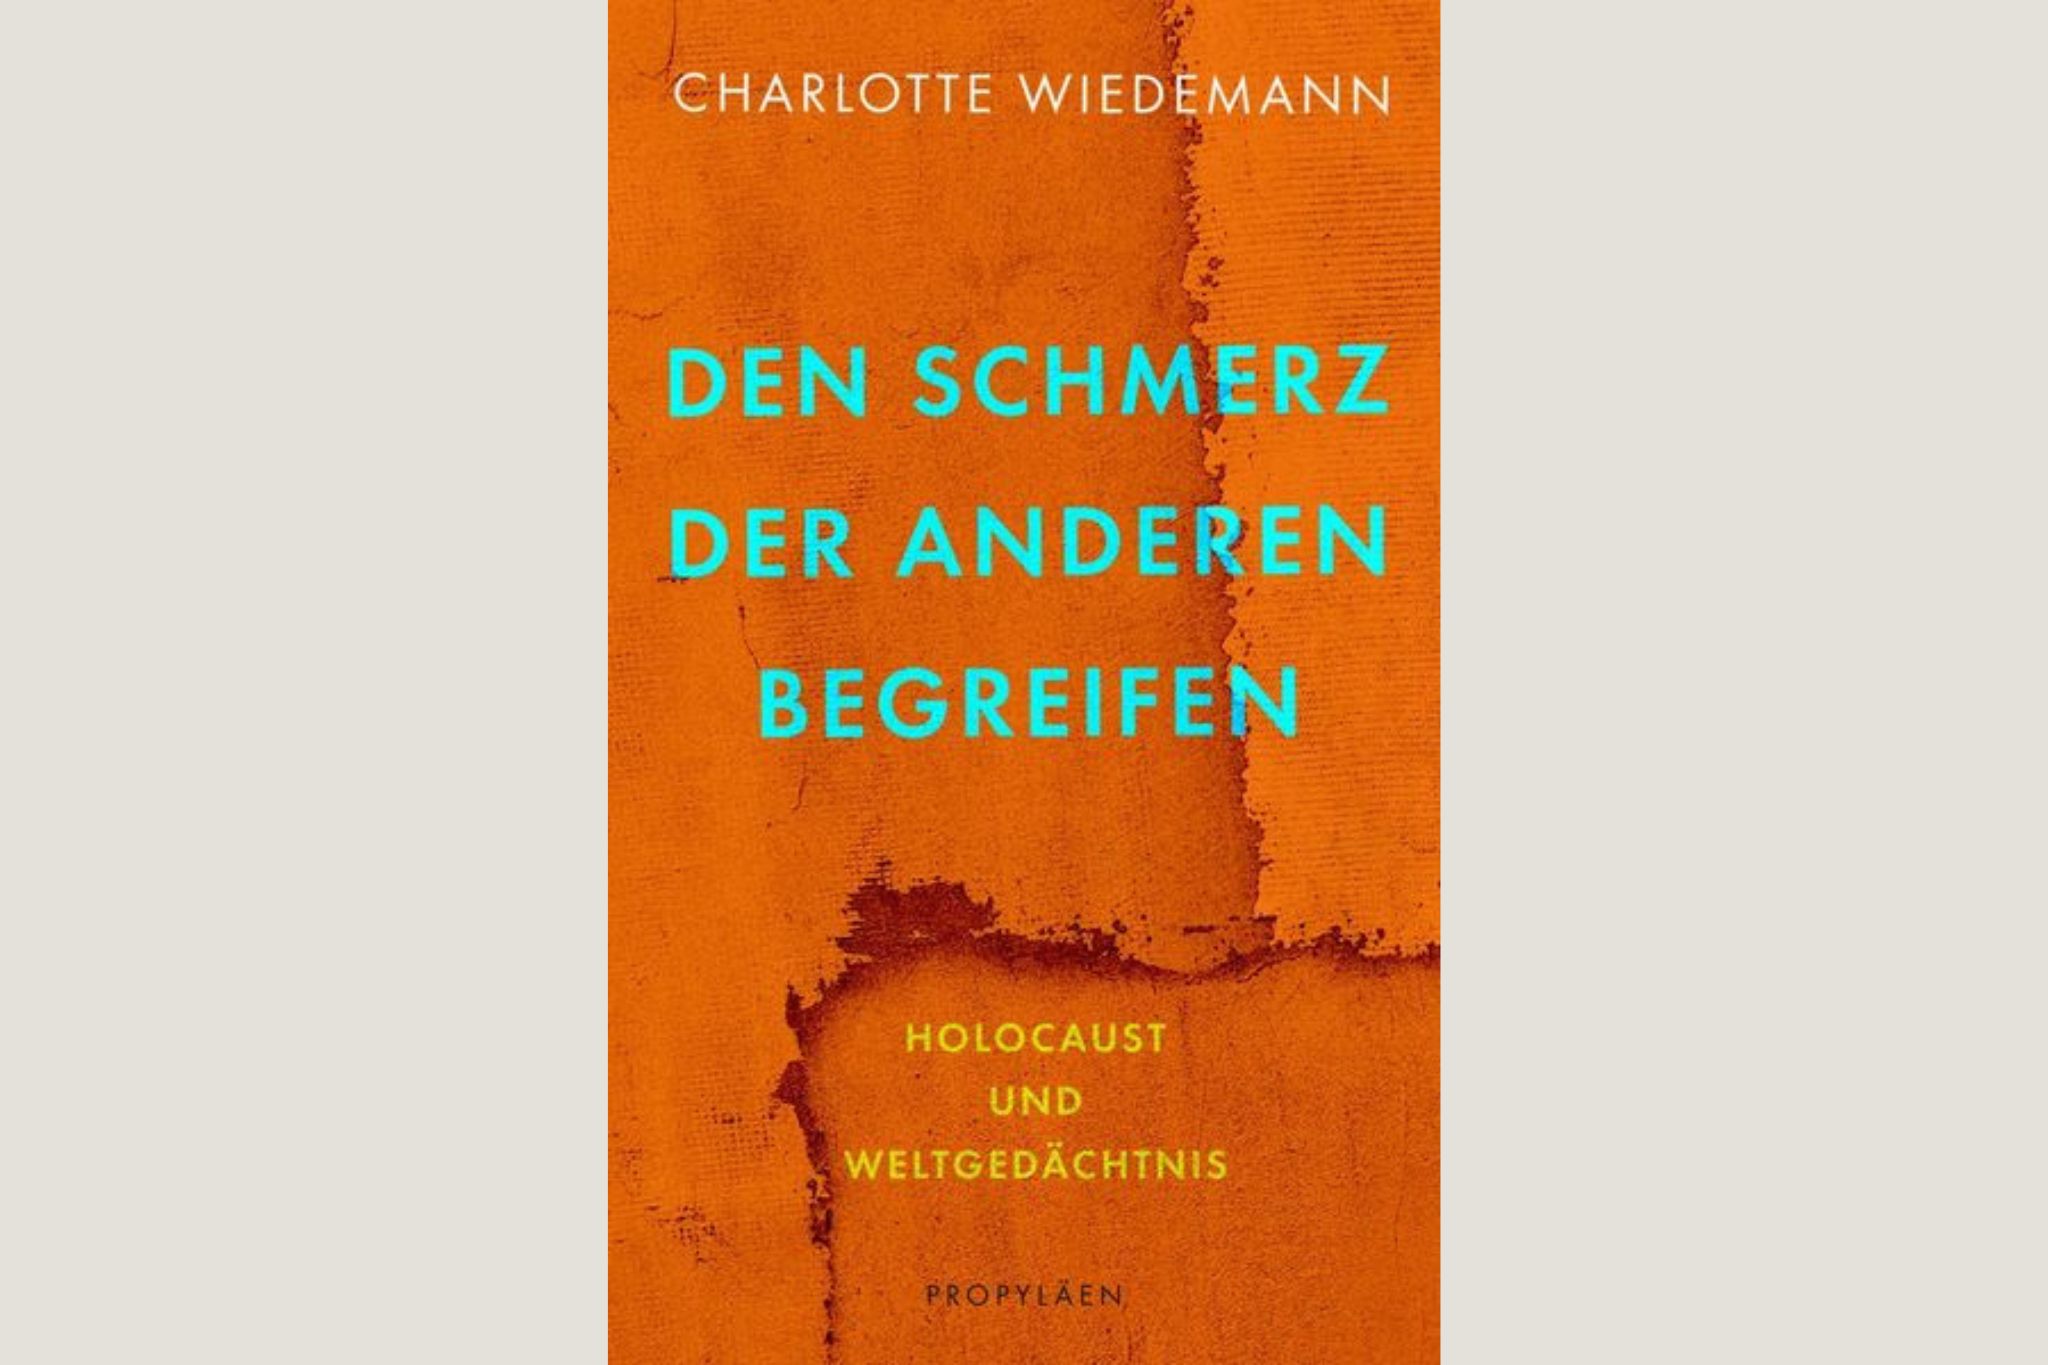 Char­lot­te Wiedemann